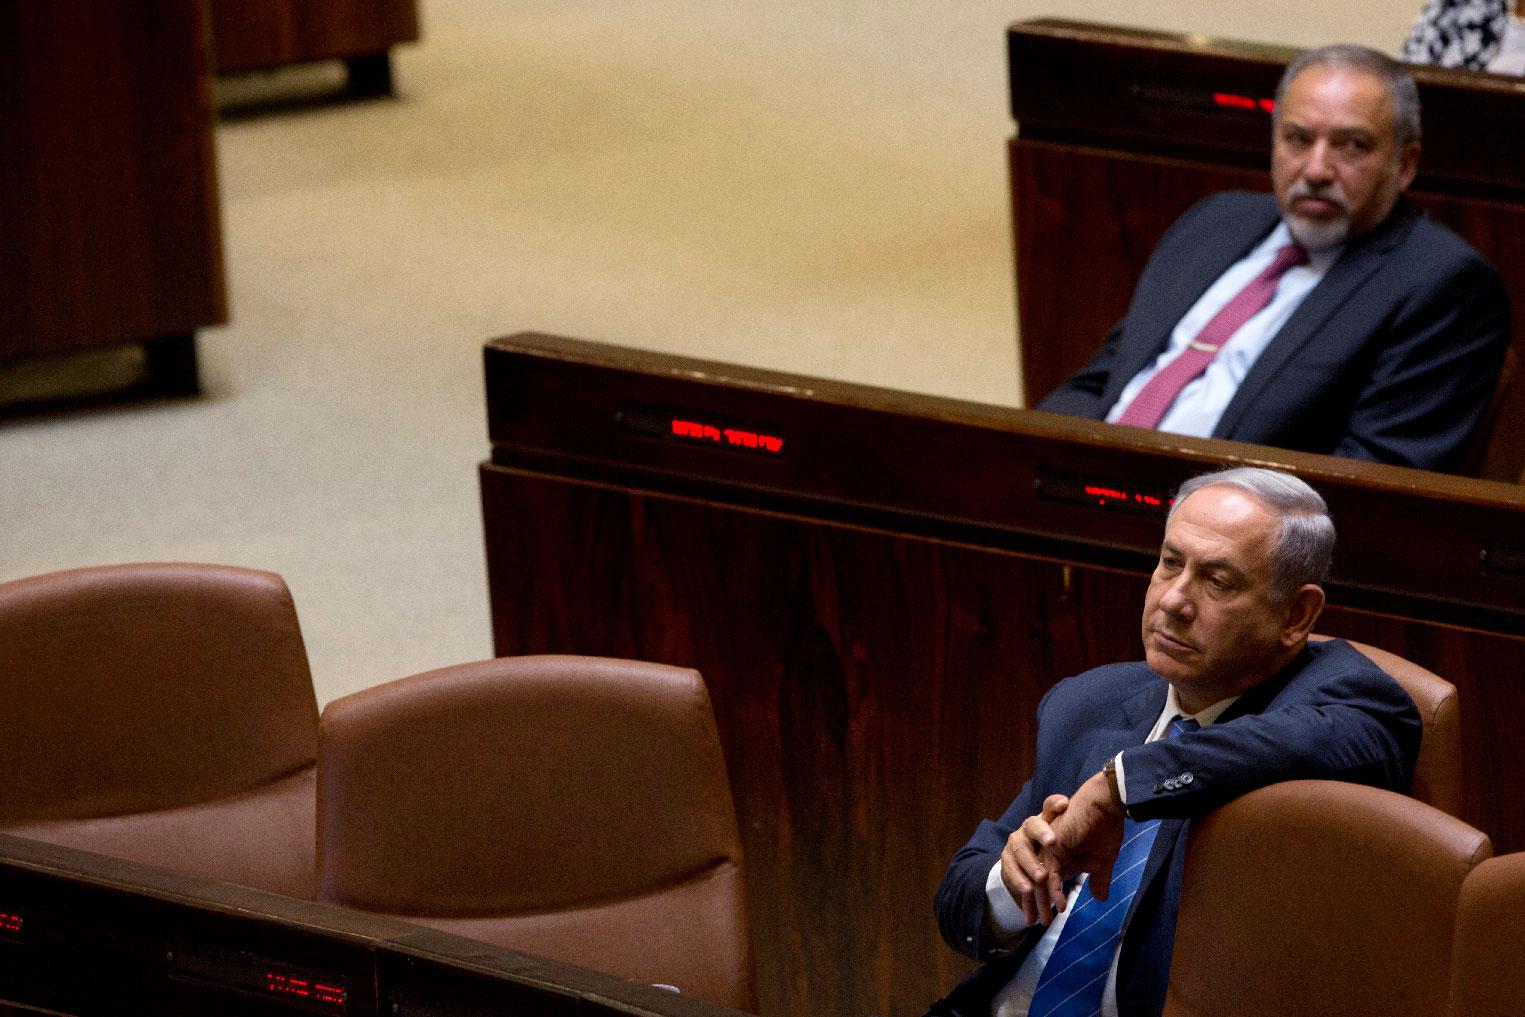 Israeli Prime Minister Benjamin Netanyahu and former Israeli Defense Minister Avigdor Lieberman sit in the Knesset